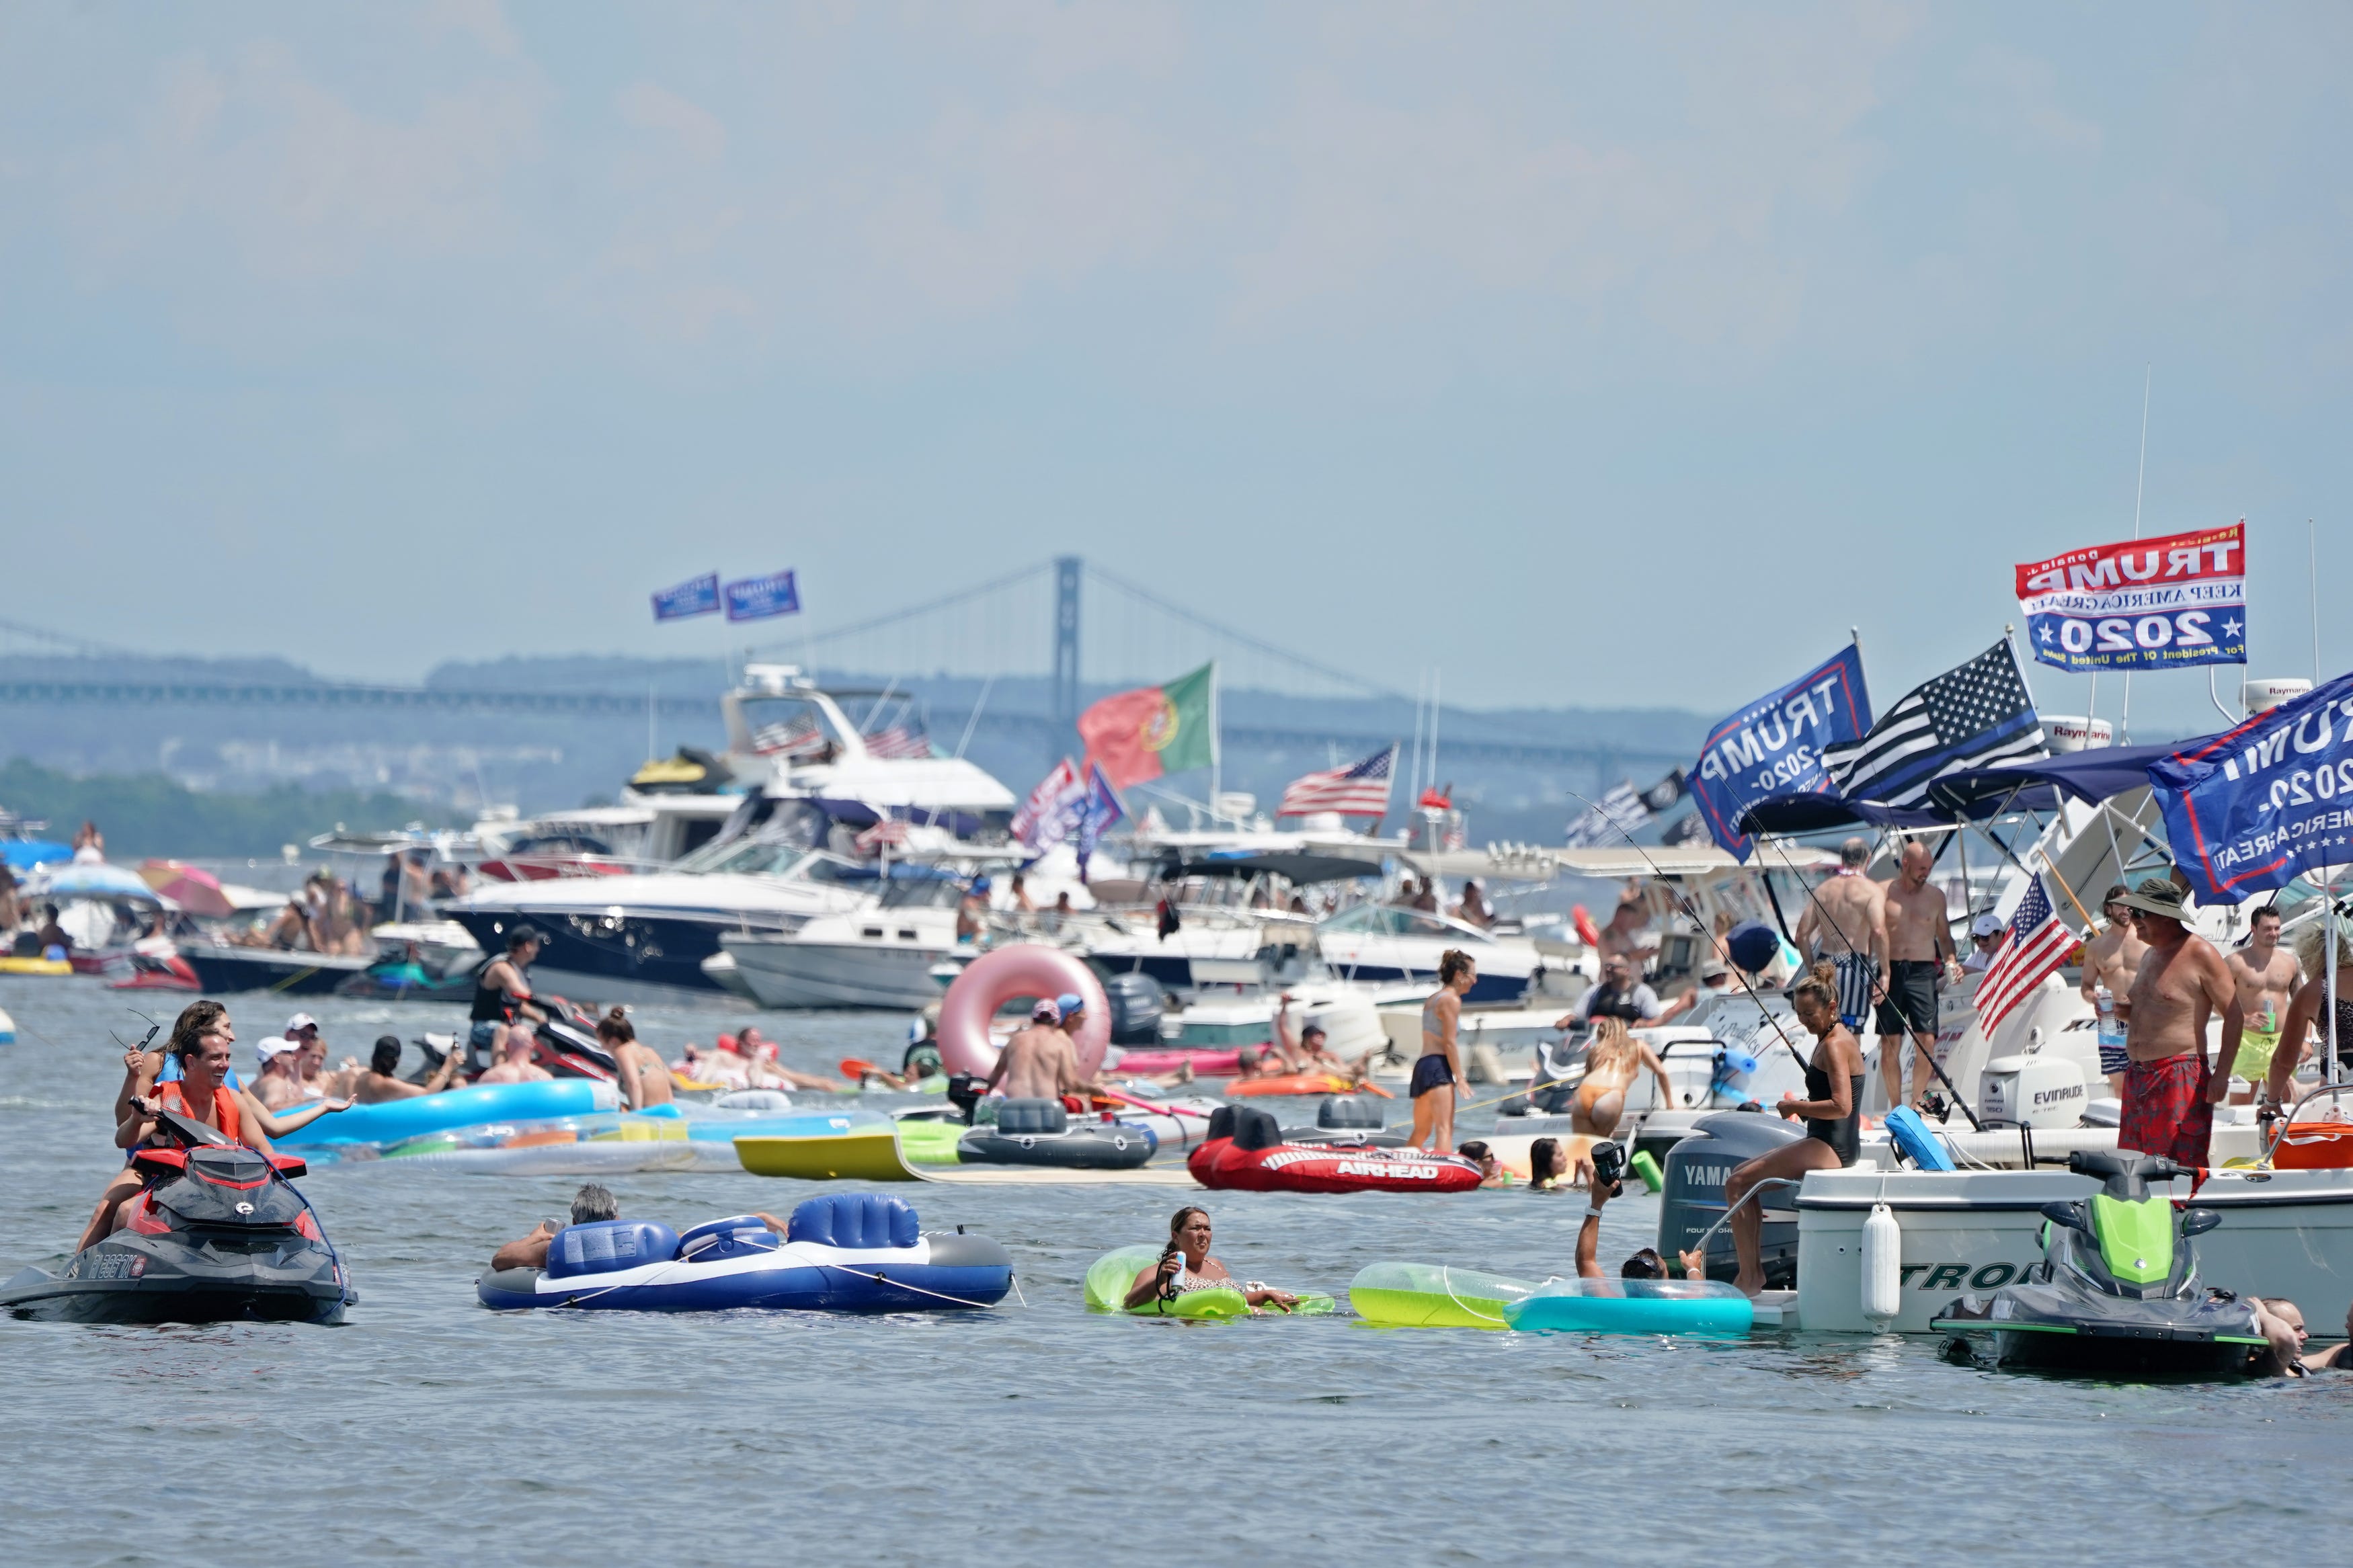 Rhode Island beaches 2023 guide to public access, parking, fees